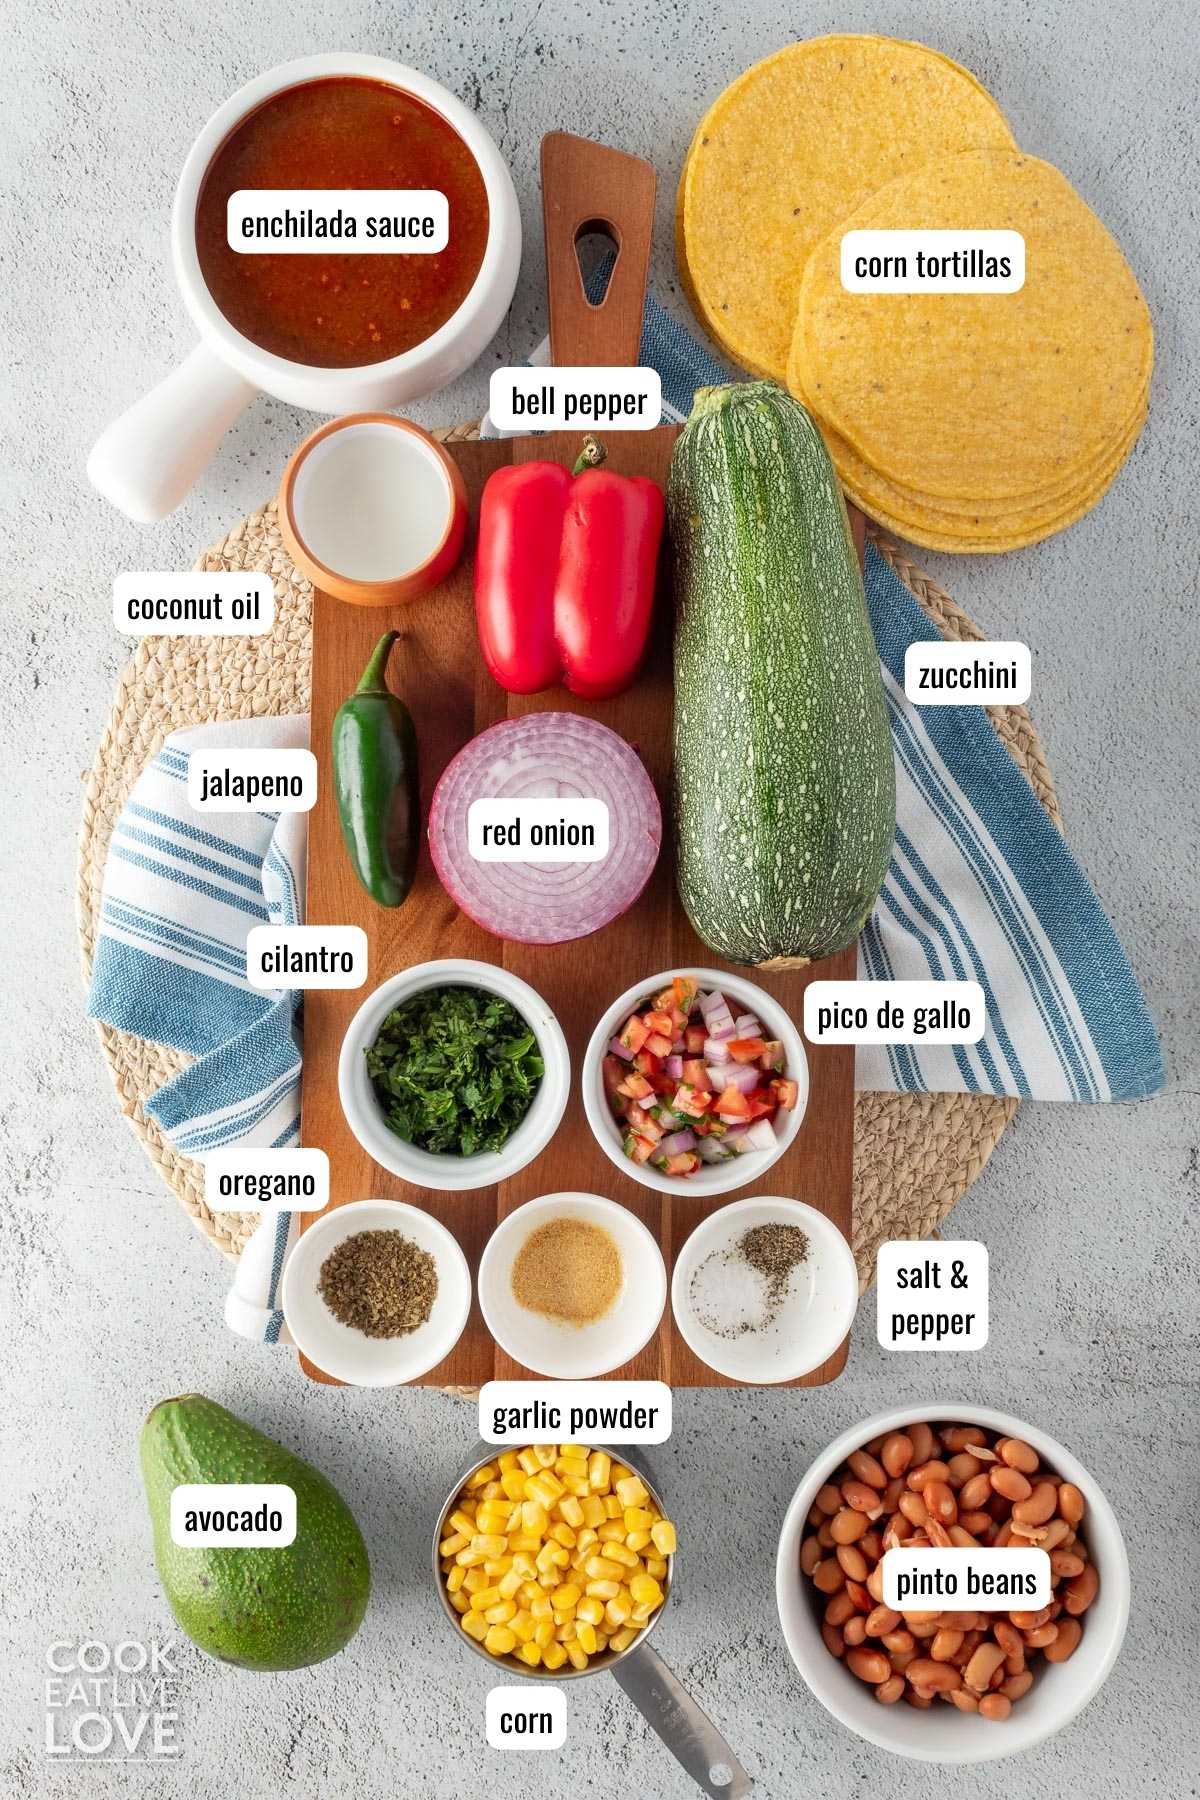 Ingredients to make vegan enchilada casserole on the table before preparing.